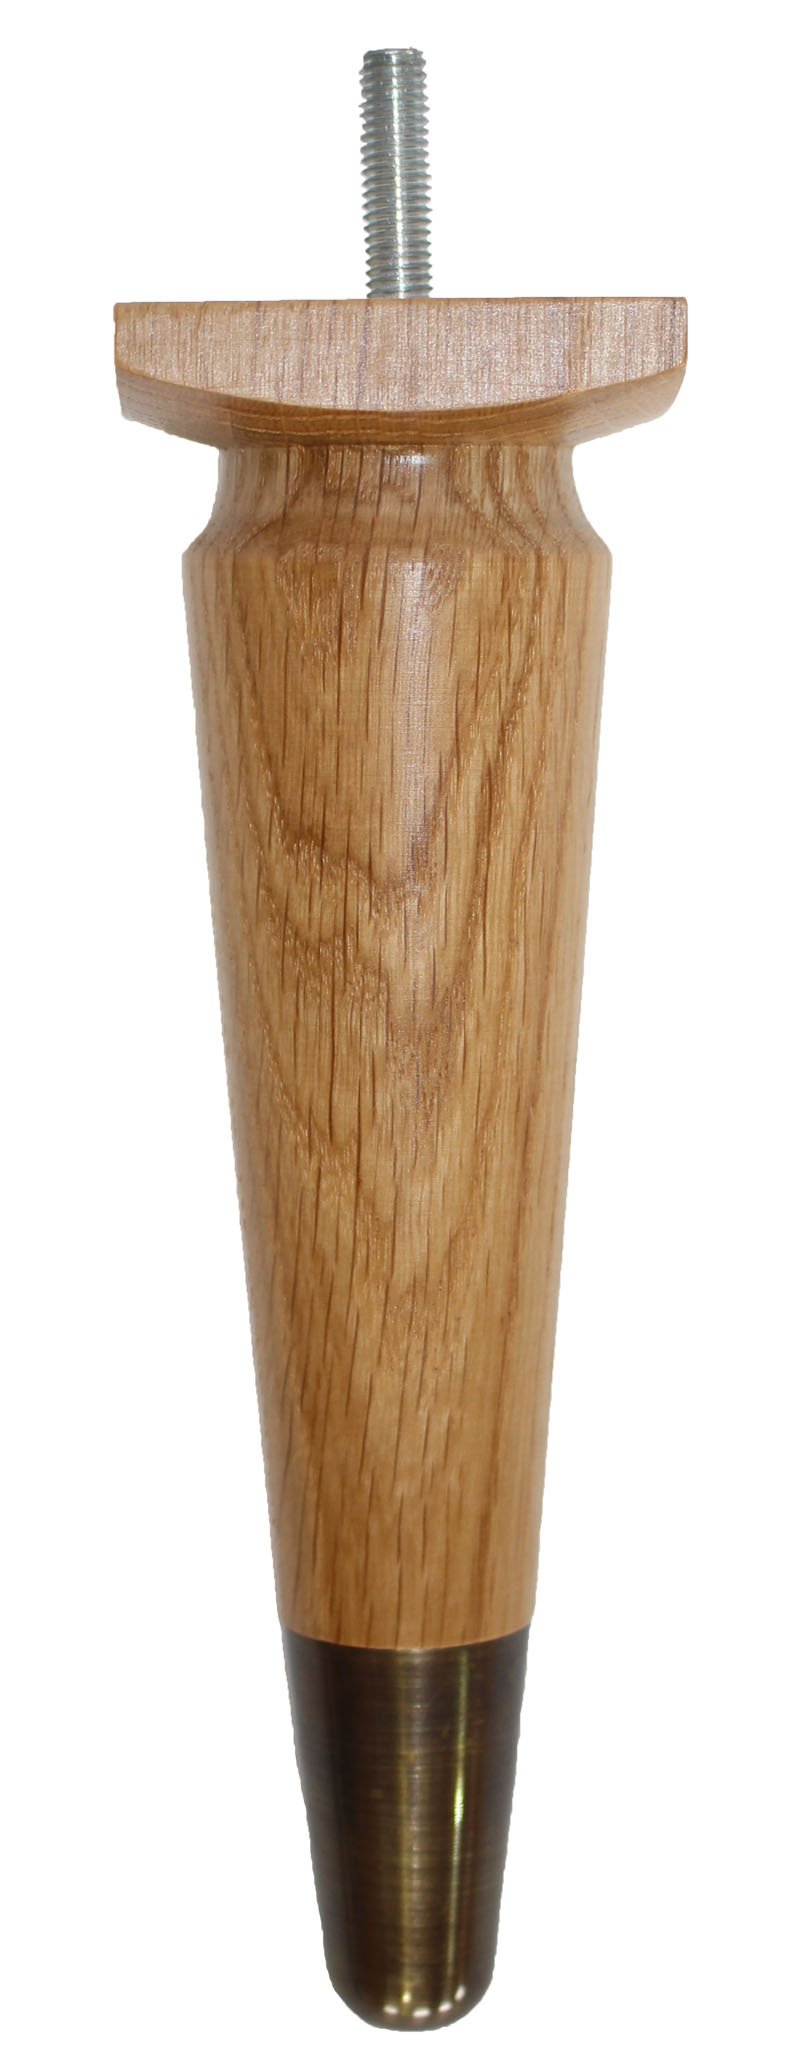 Thelma Solid Oak Furniture Legs - Natural Finish - Antique Slipper Cups - Set of 4